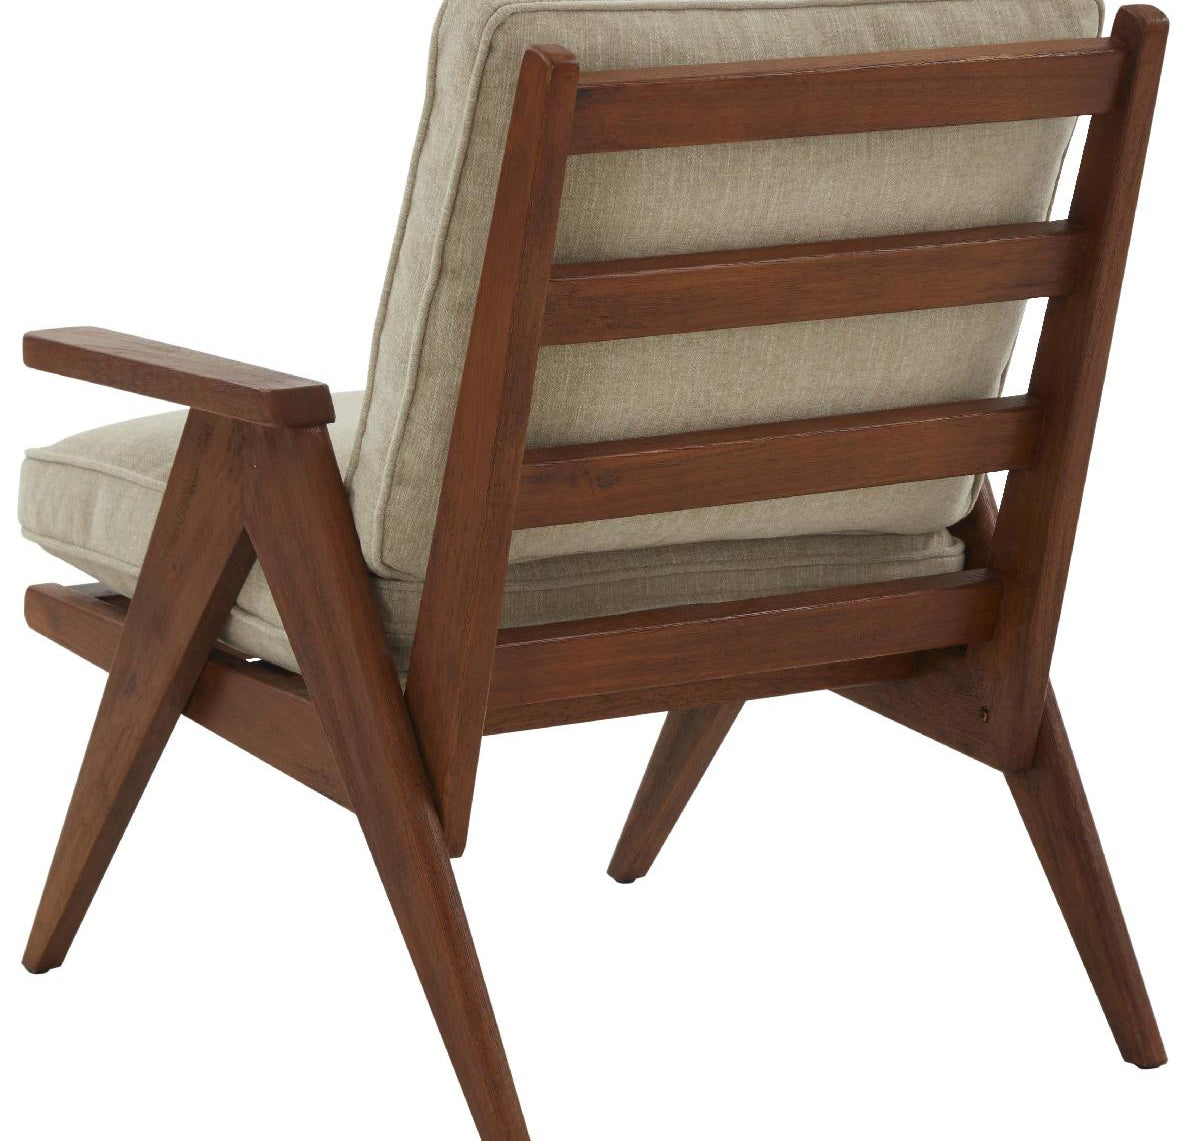 Safavieh Couture Calita Scandinavian Accent Chair - Beige / Light Brown